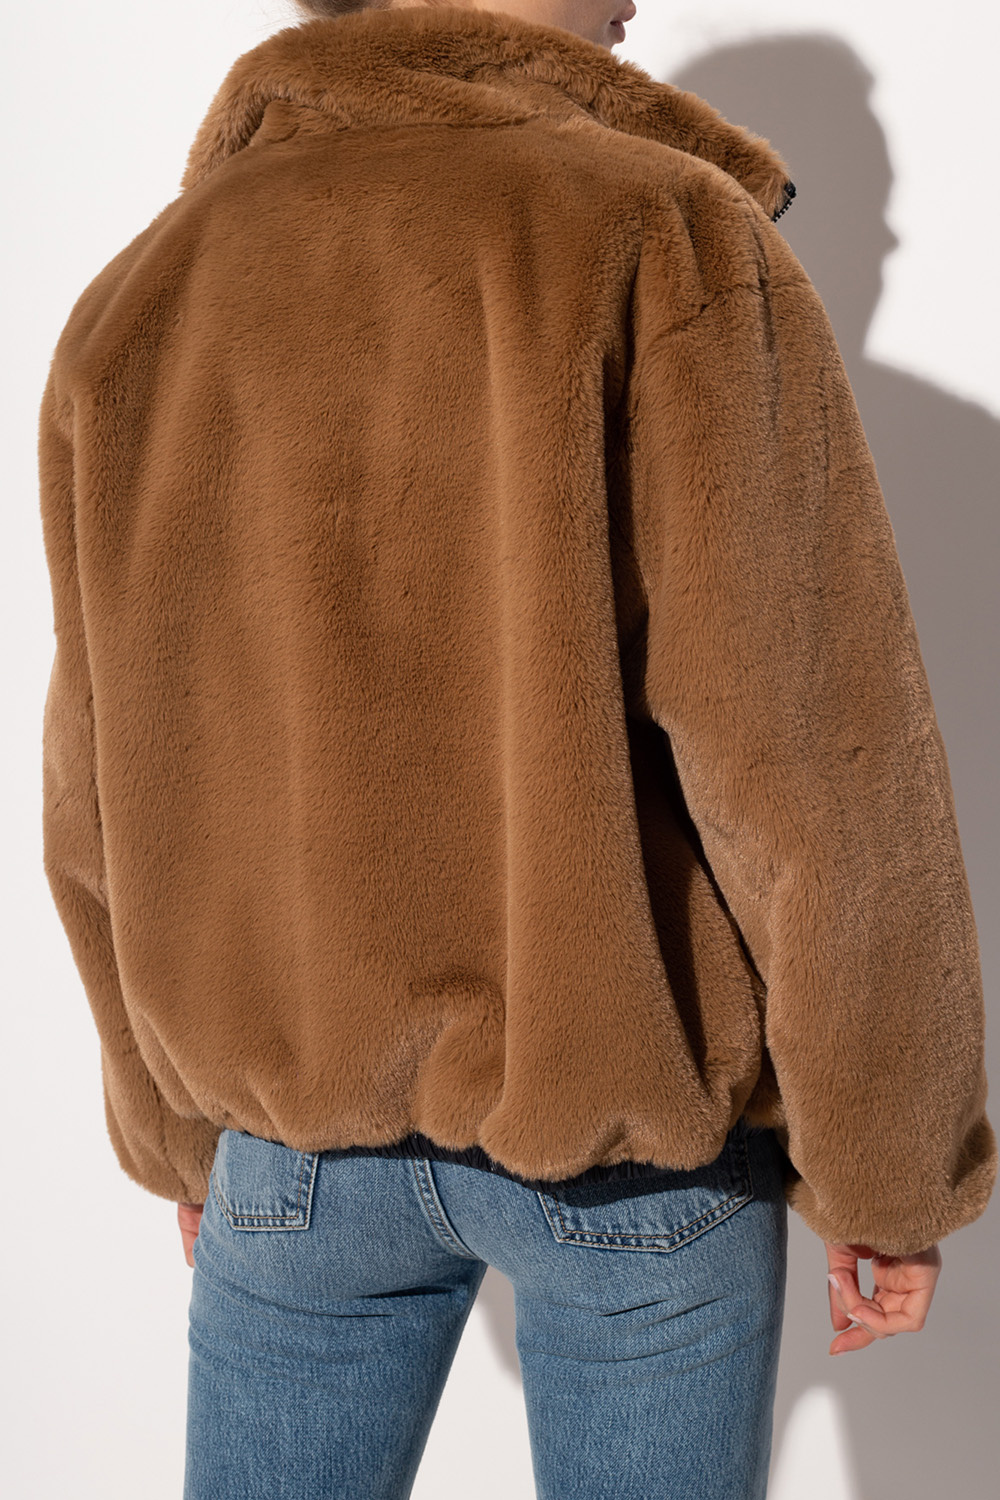 long-sleeved cashmere-knit sweatshirt - 'Adokse' reversible jacket